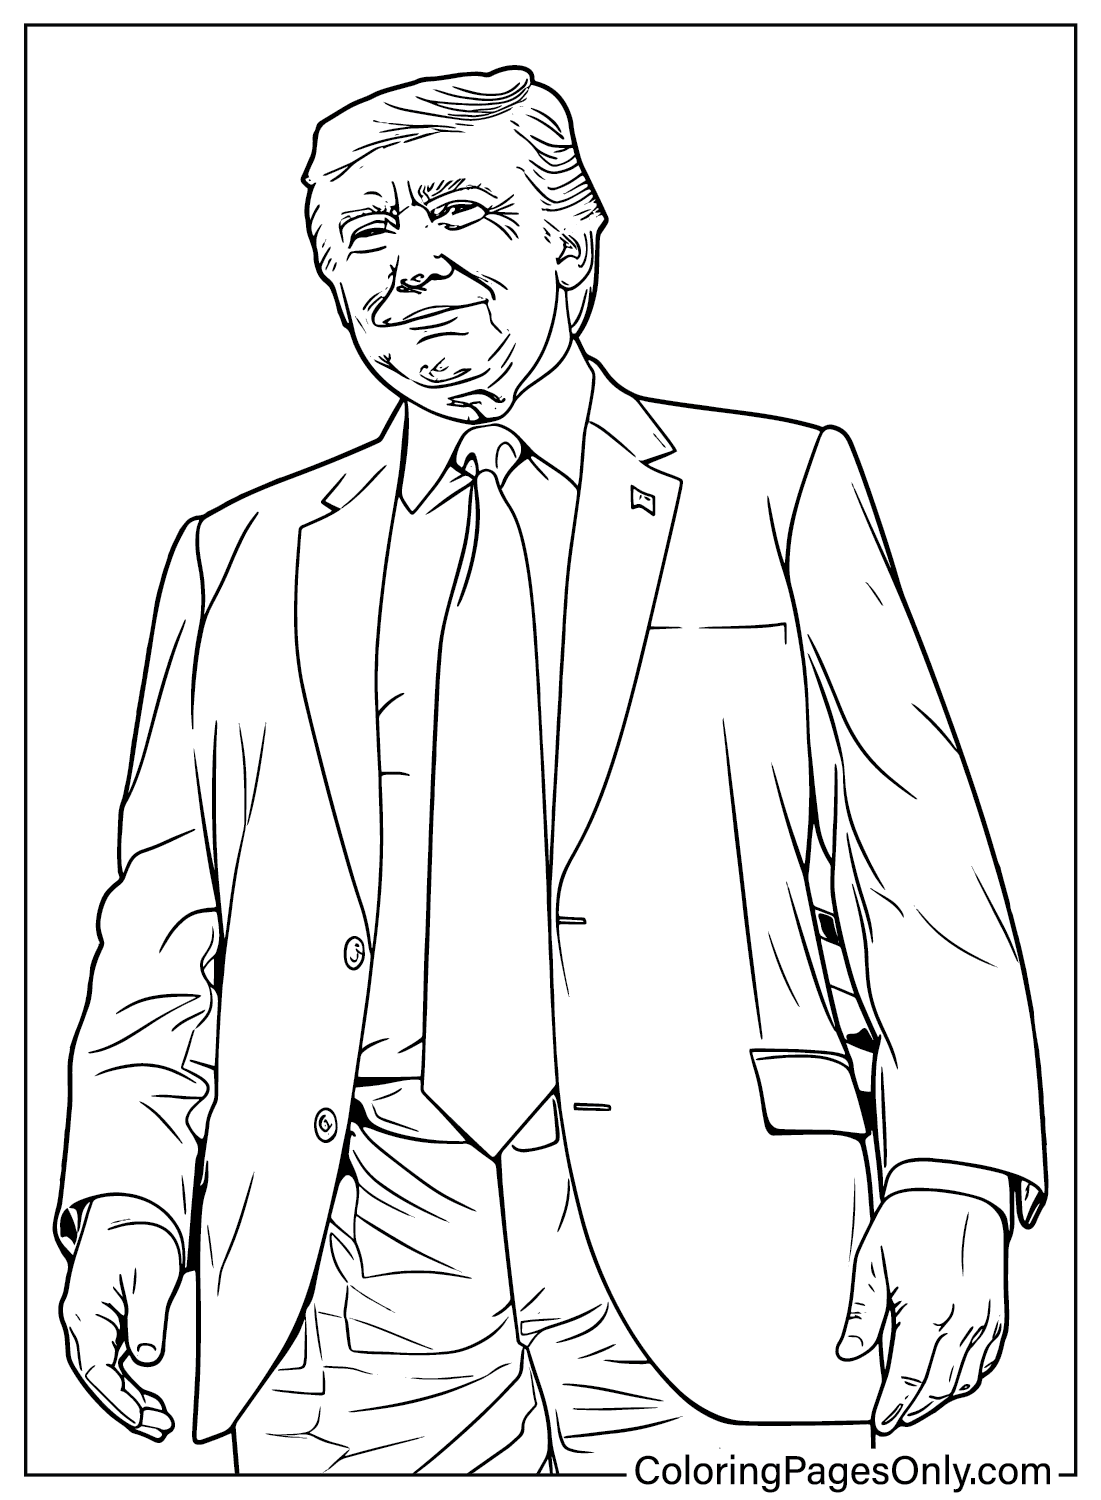 Página para colorear imprimible de Donald Trump de Donald Trump